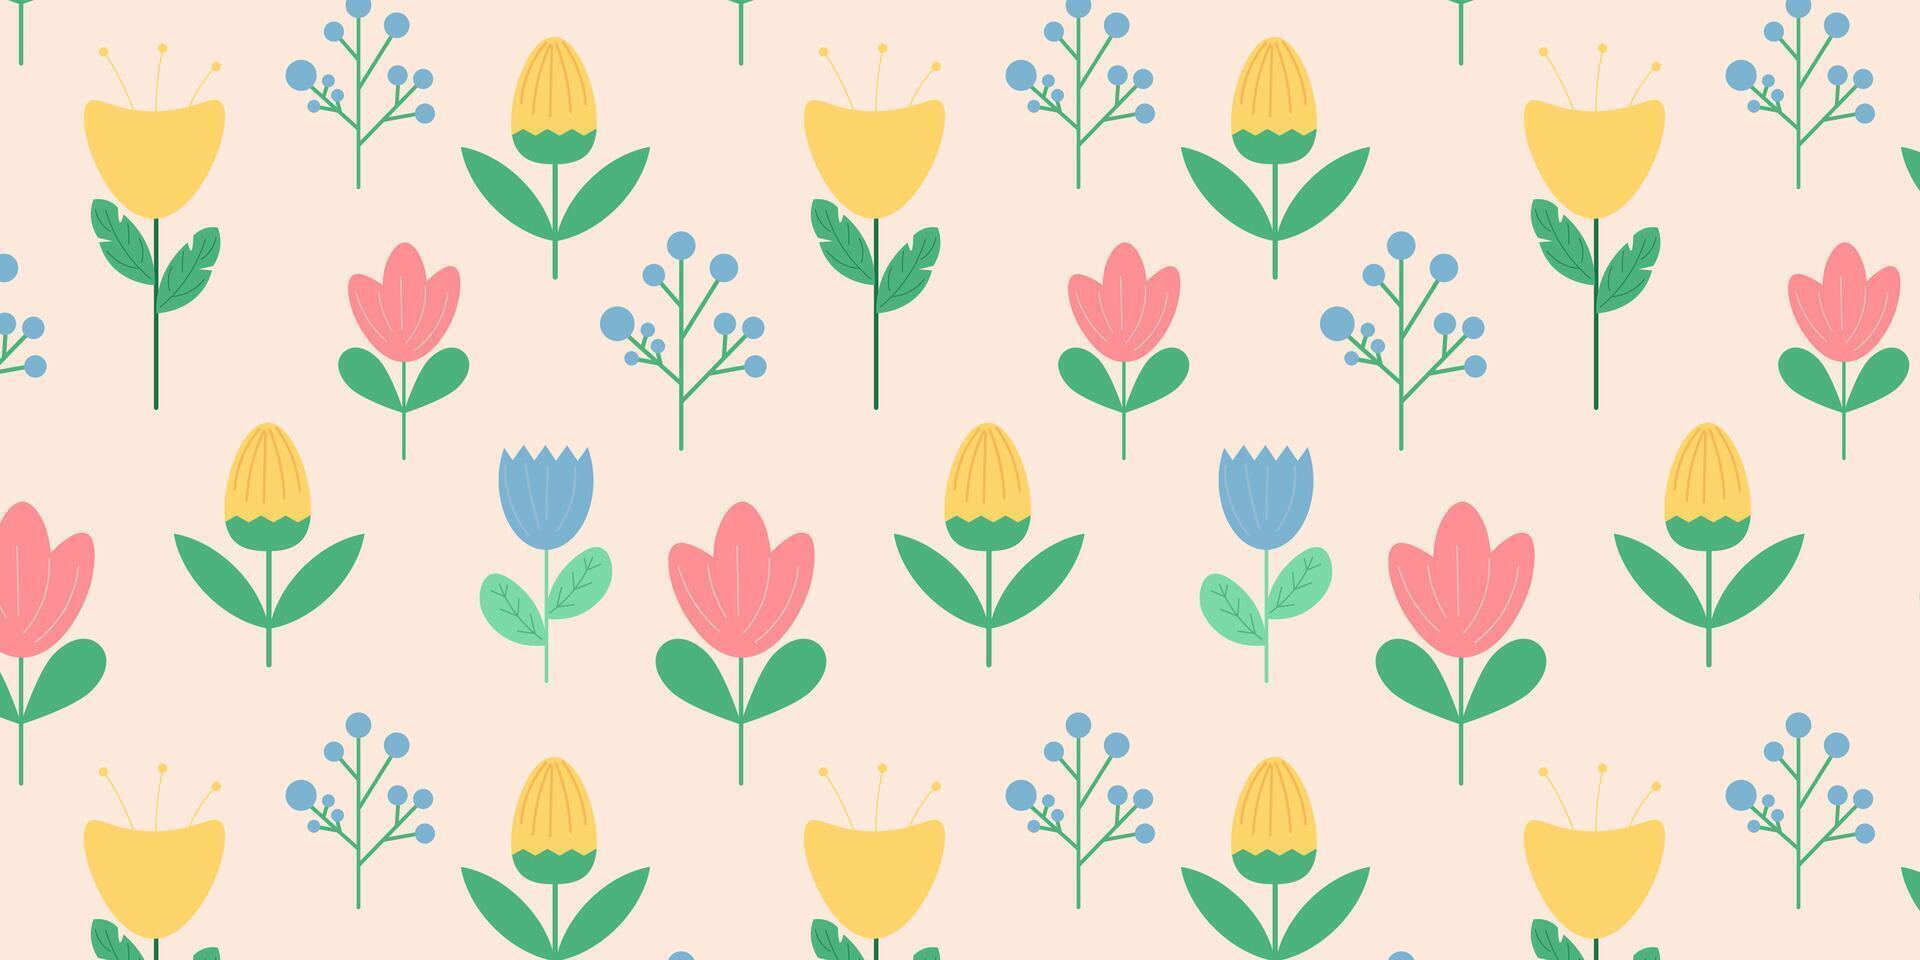 Spring or summer flower seamless pattern. vector illustration in flat cartoon style.